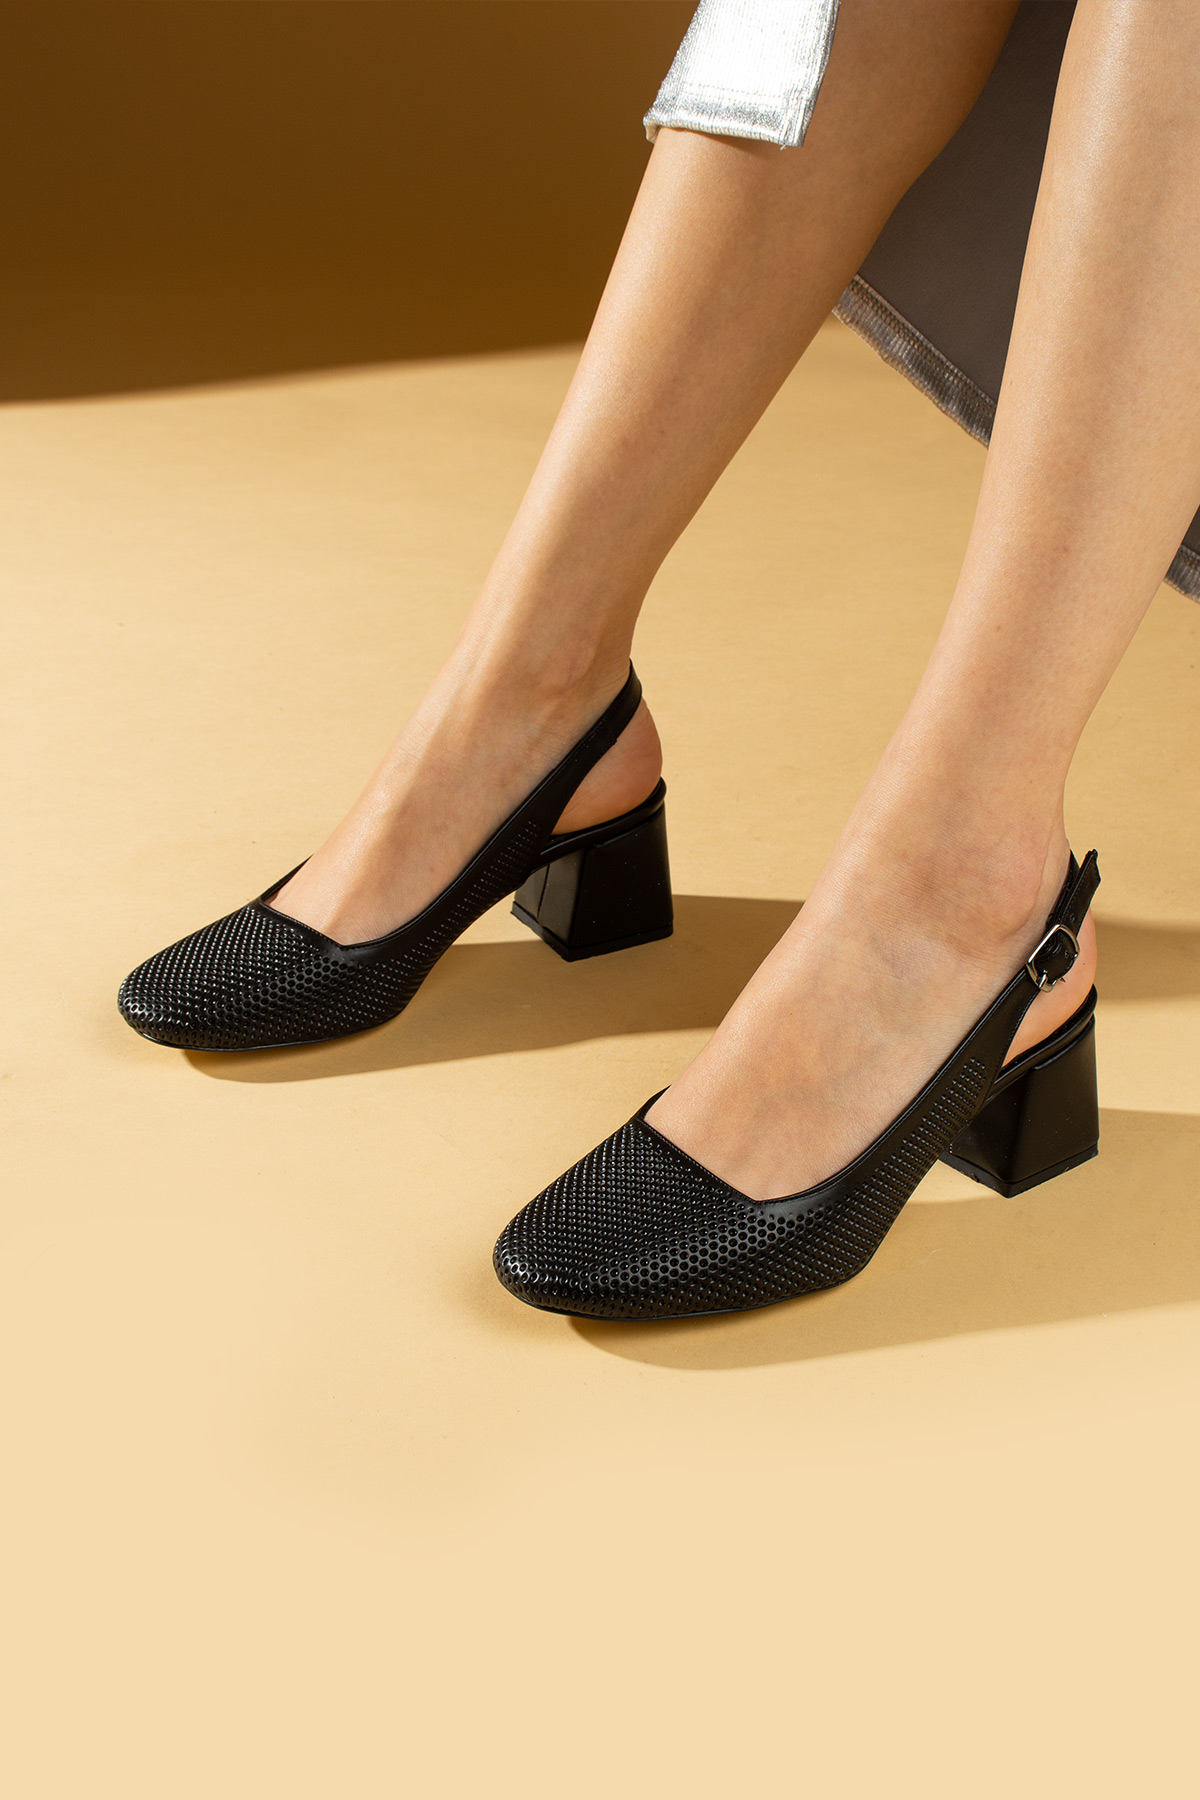 Pembe Potin Lazer Kesim Rahat Taban Tokalı Kadın Topuklu Ayakkabı 001-275-24 - Siyah